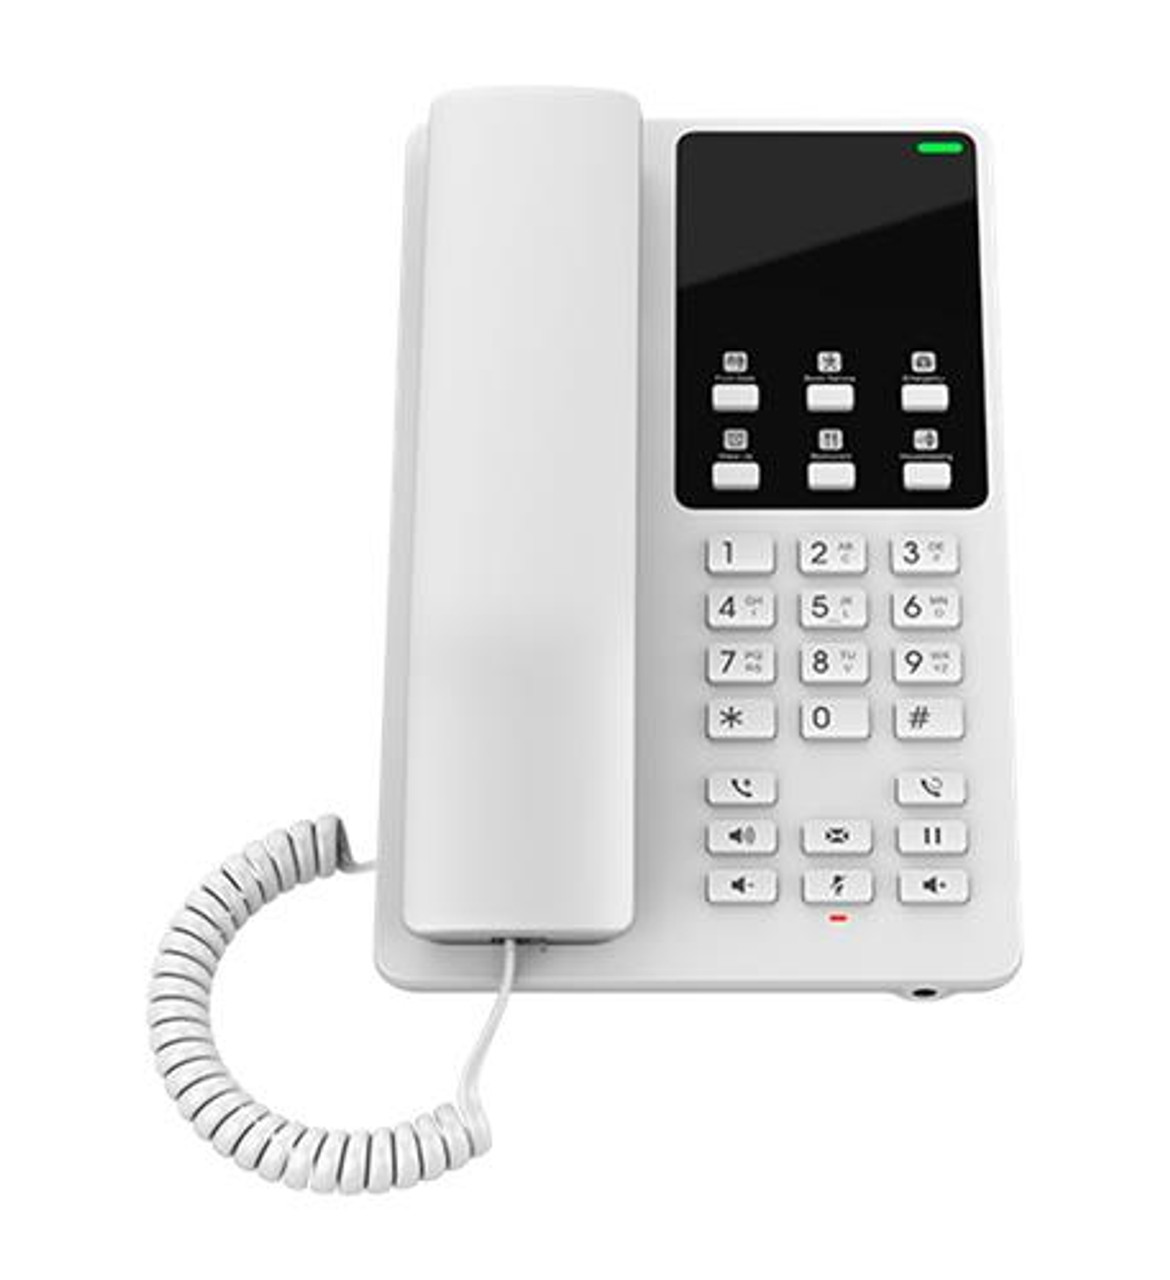 GHP620
Desktop Hotel Phone - White